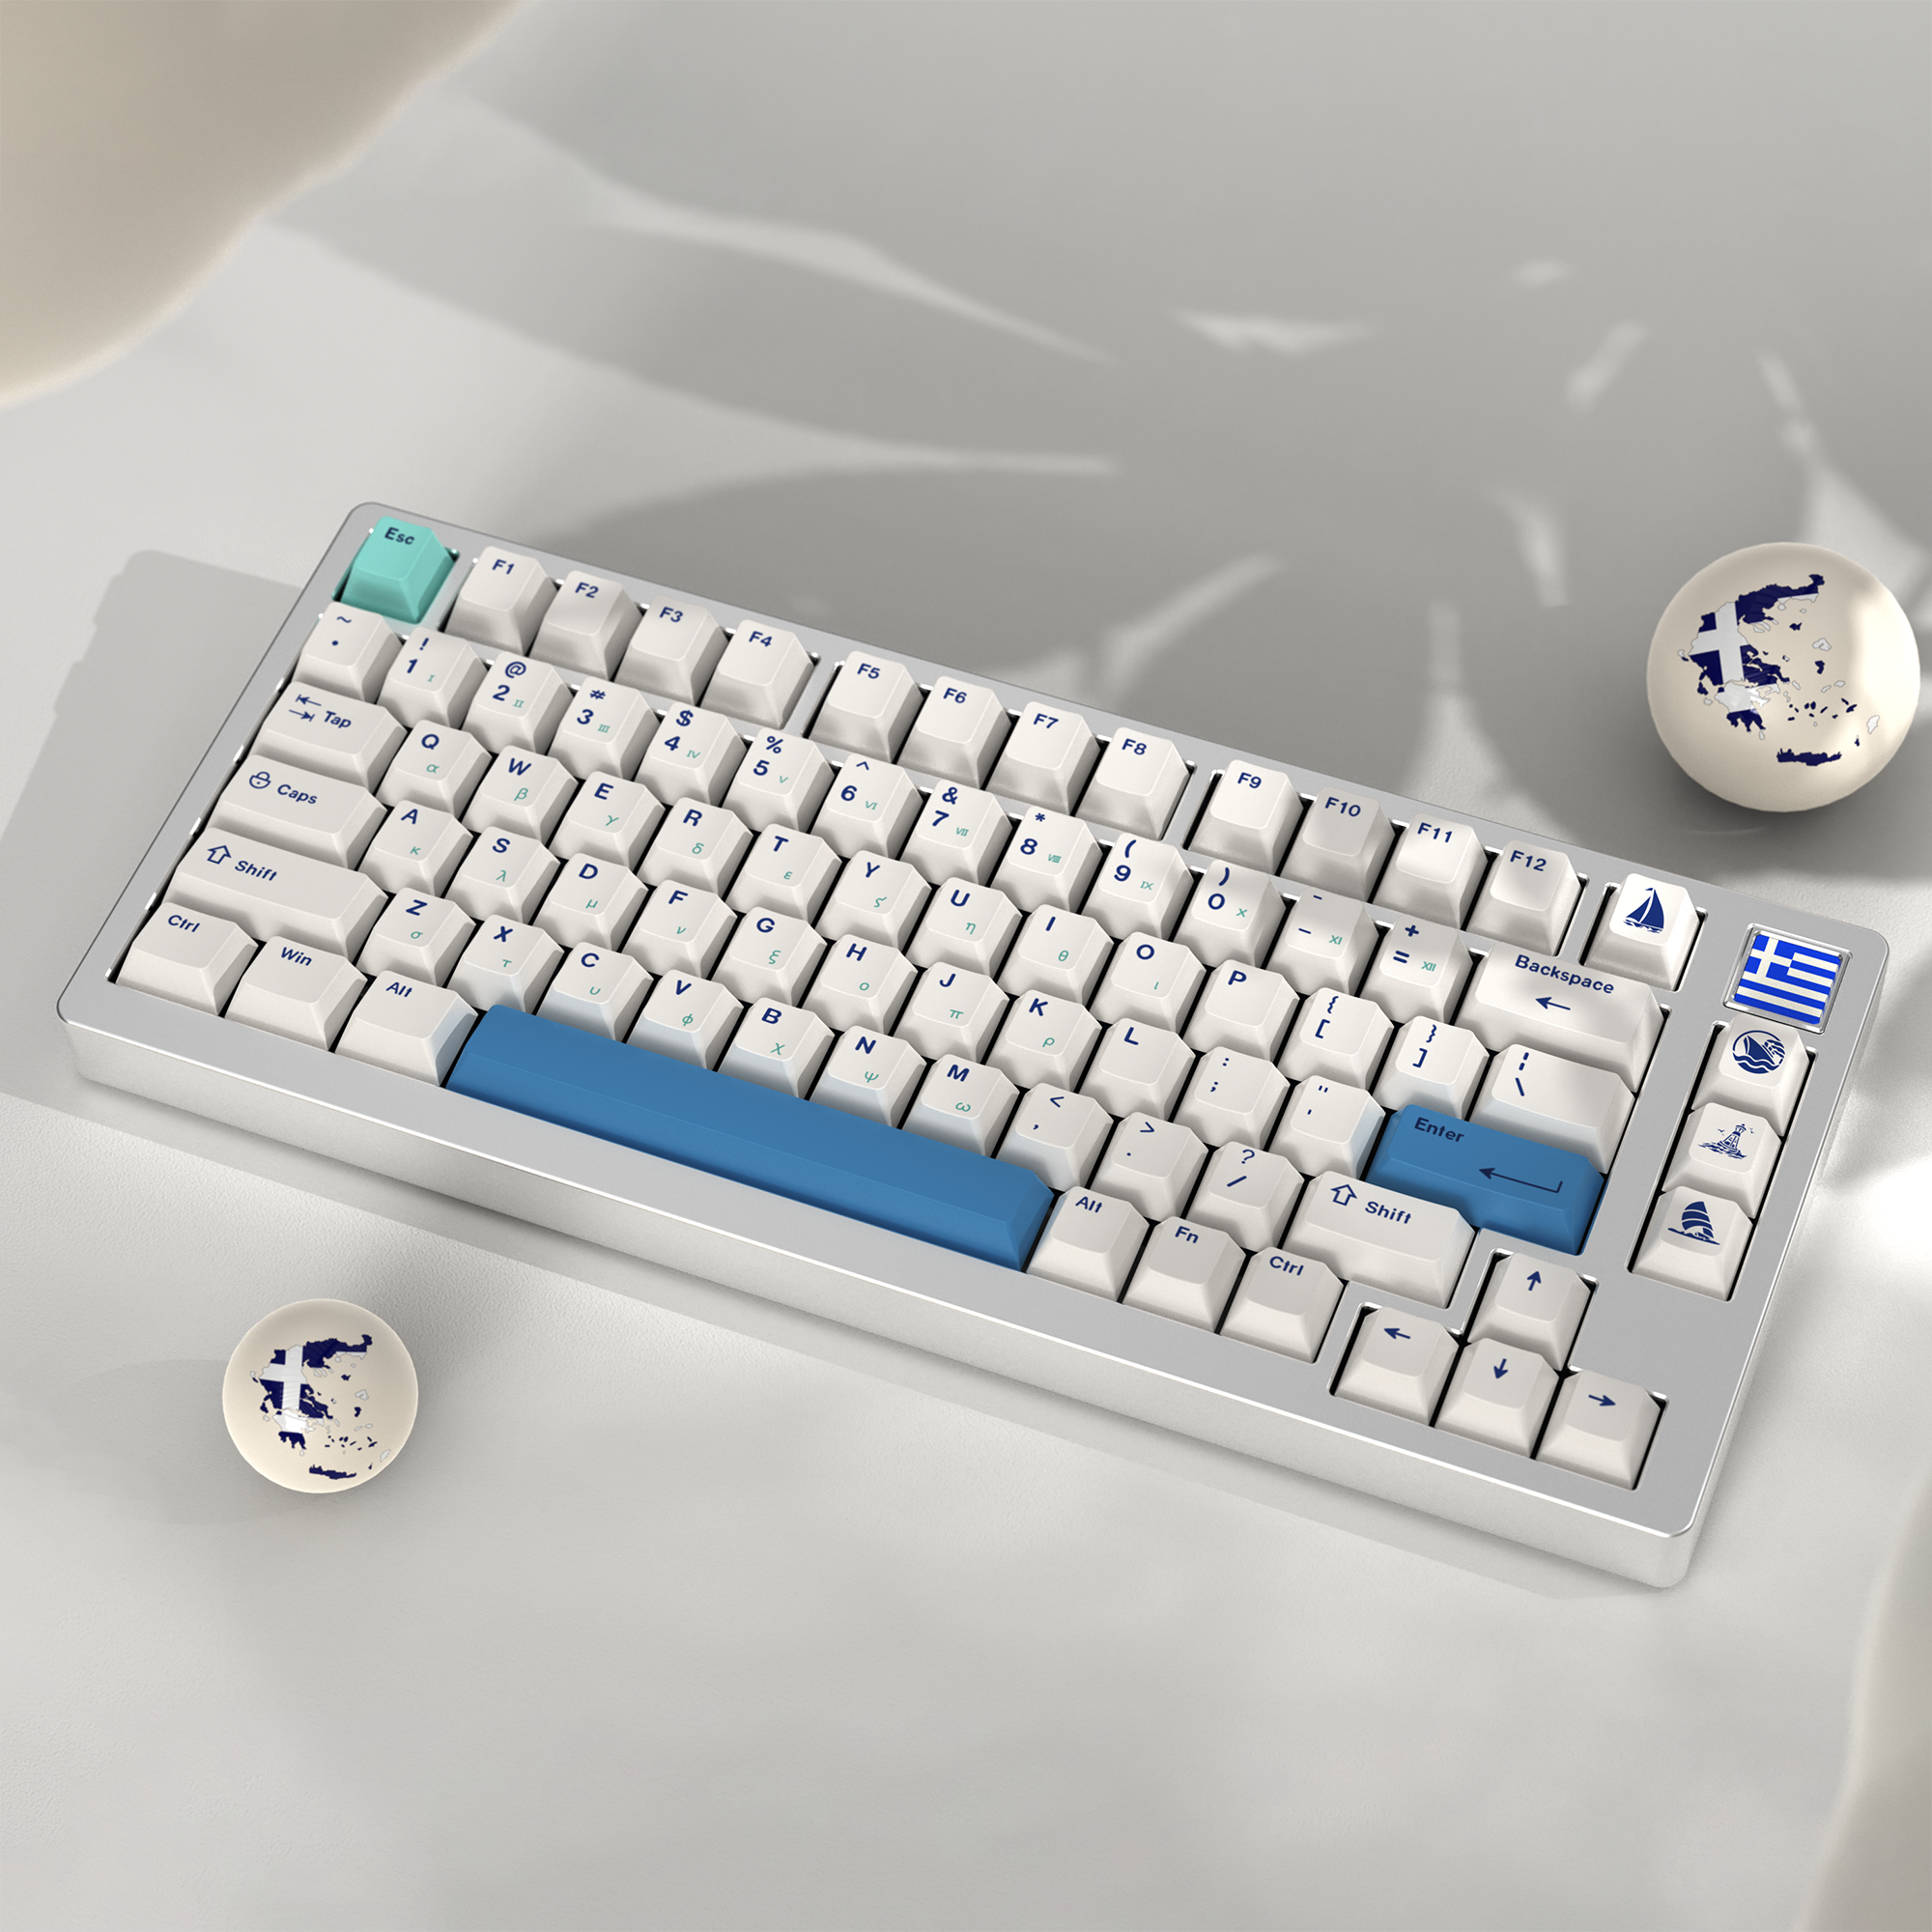 Createkeebs Thera75 v2- 75% Custom Mechanical Keyboard (Silver)